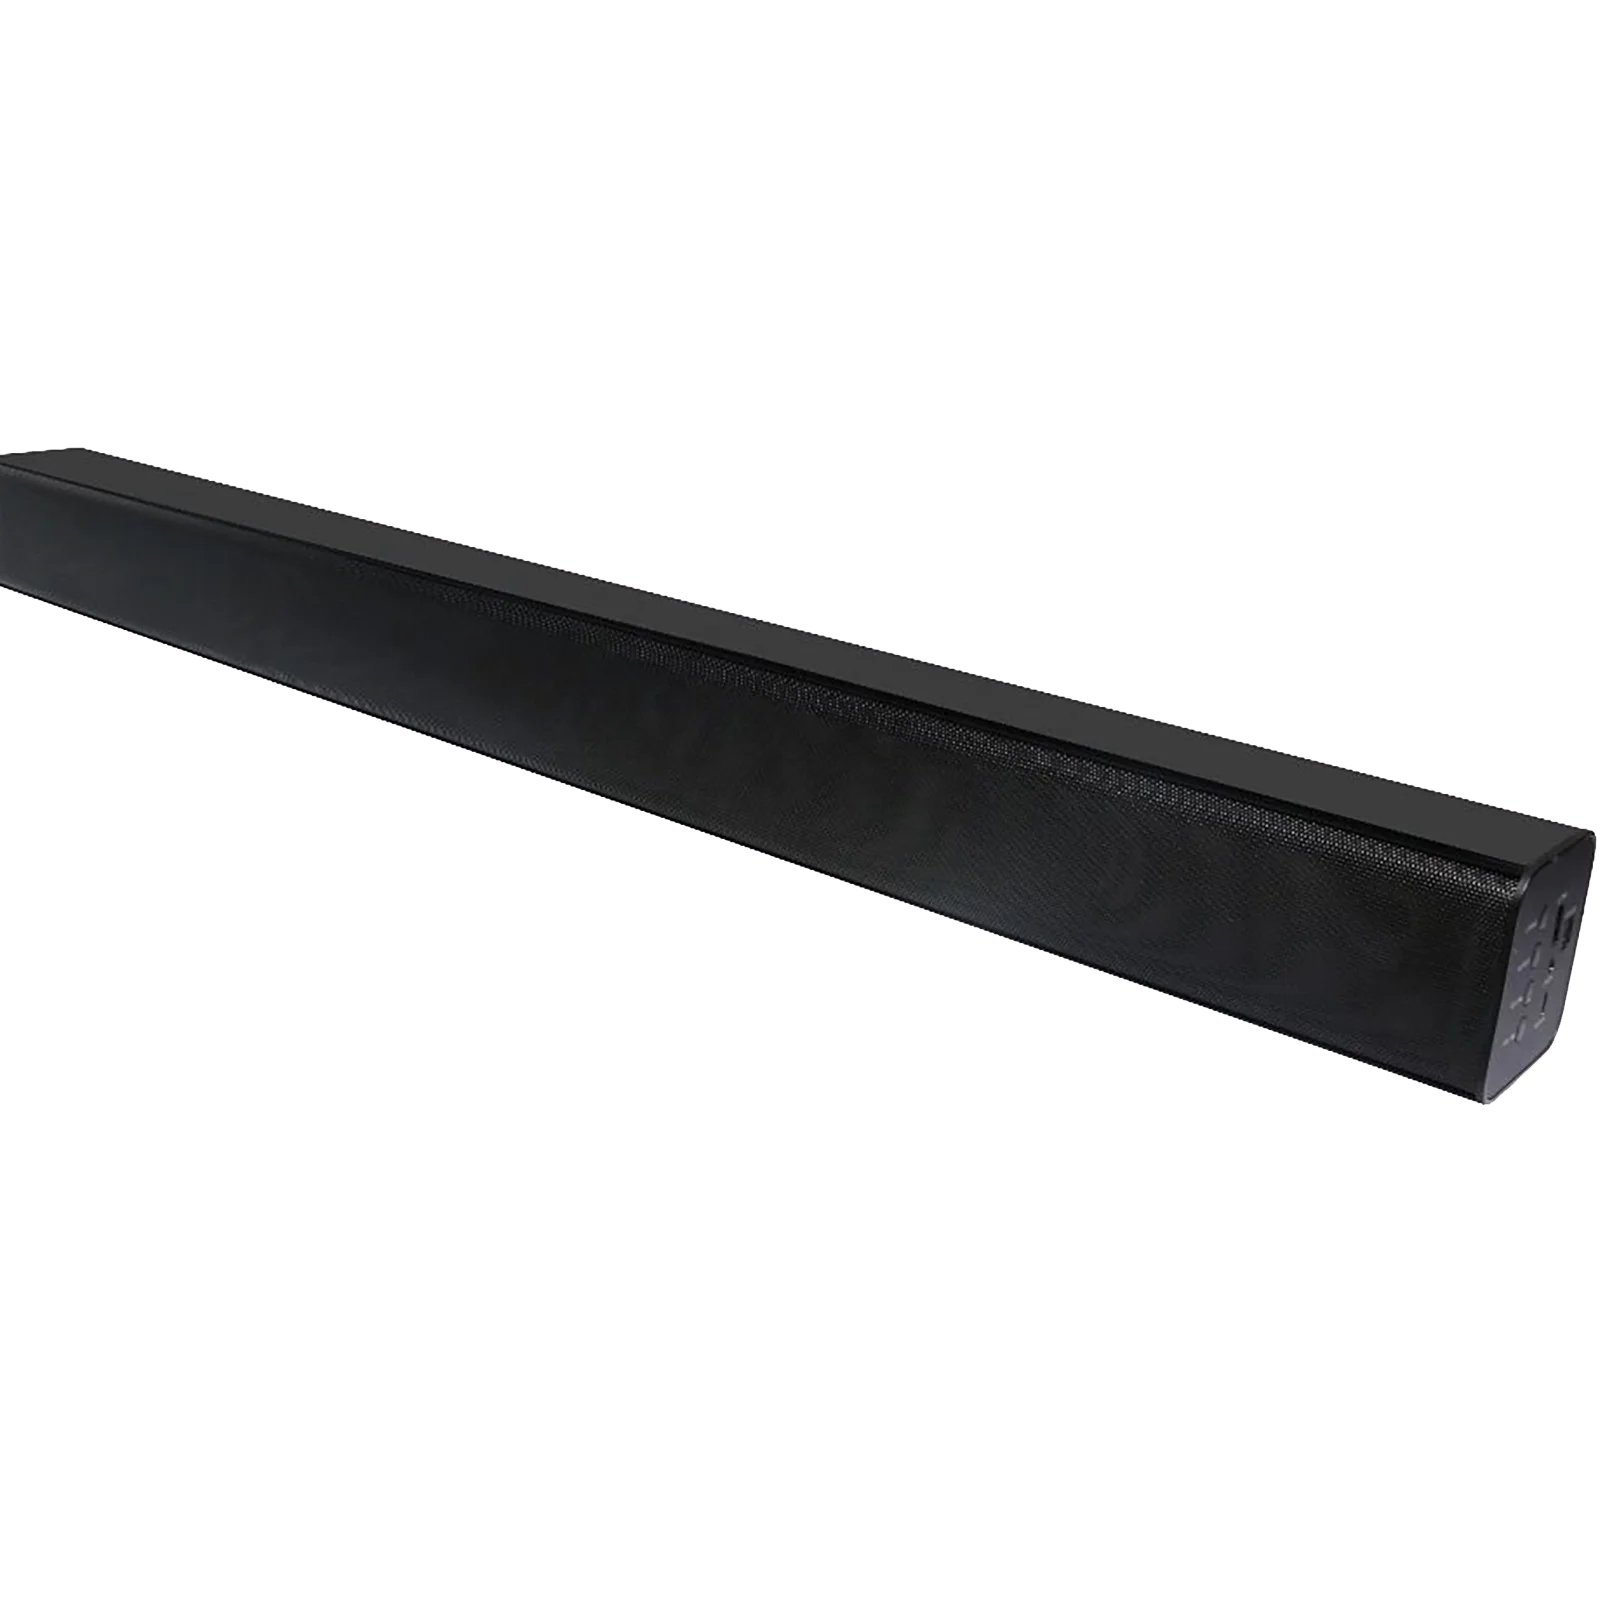 Factory Outlet Home Theatre System Soundbar Sound Bar With Built In Bass USB FM For Tv Speaker Bar